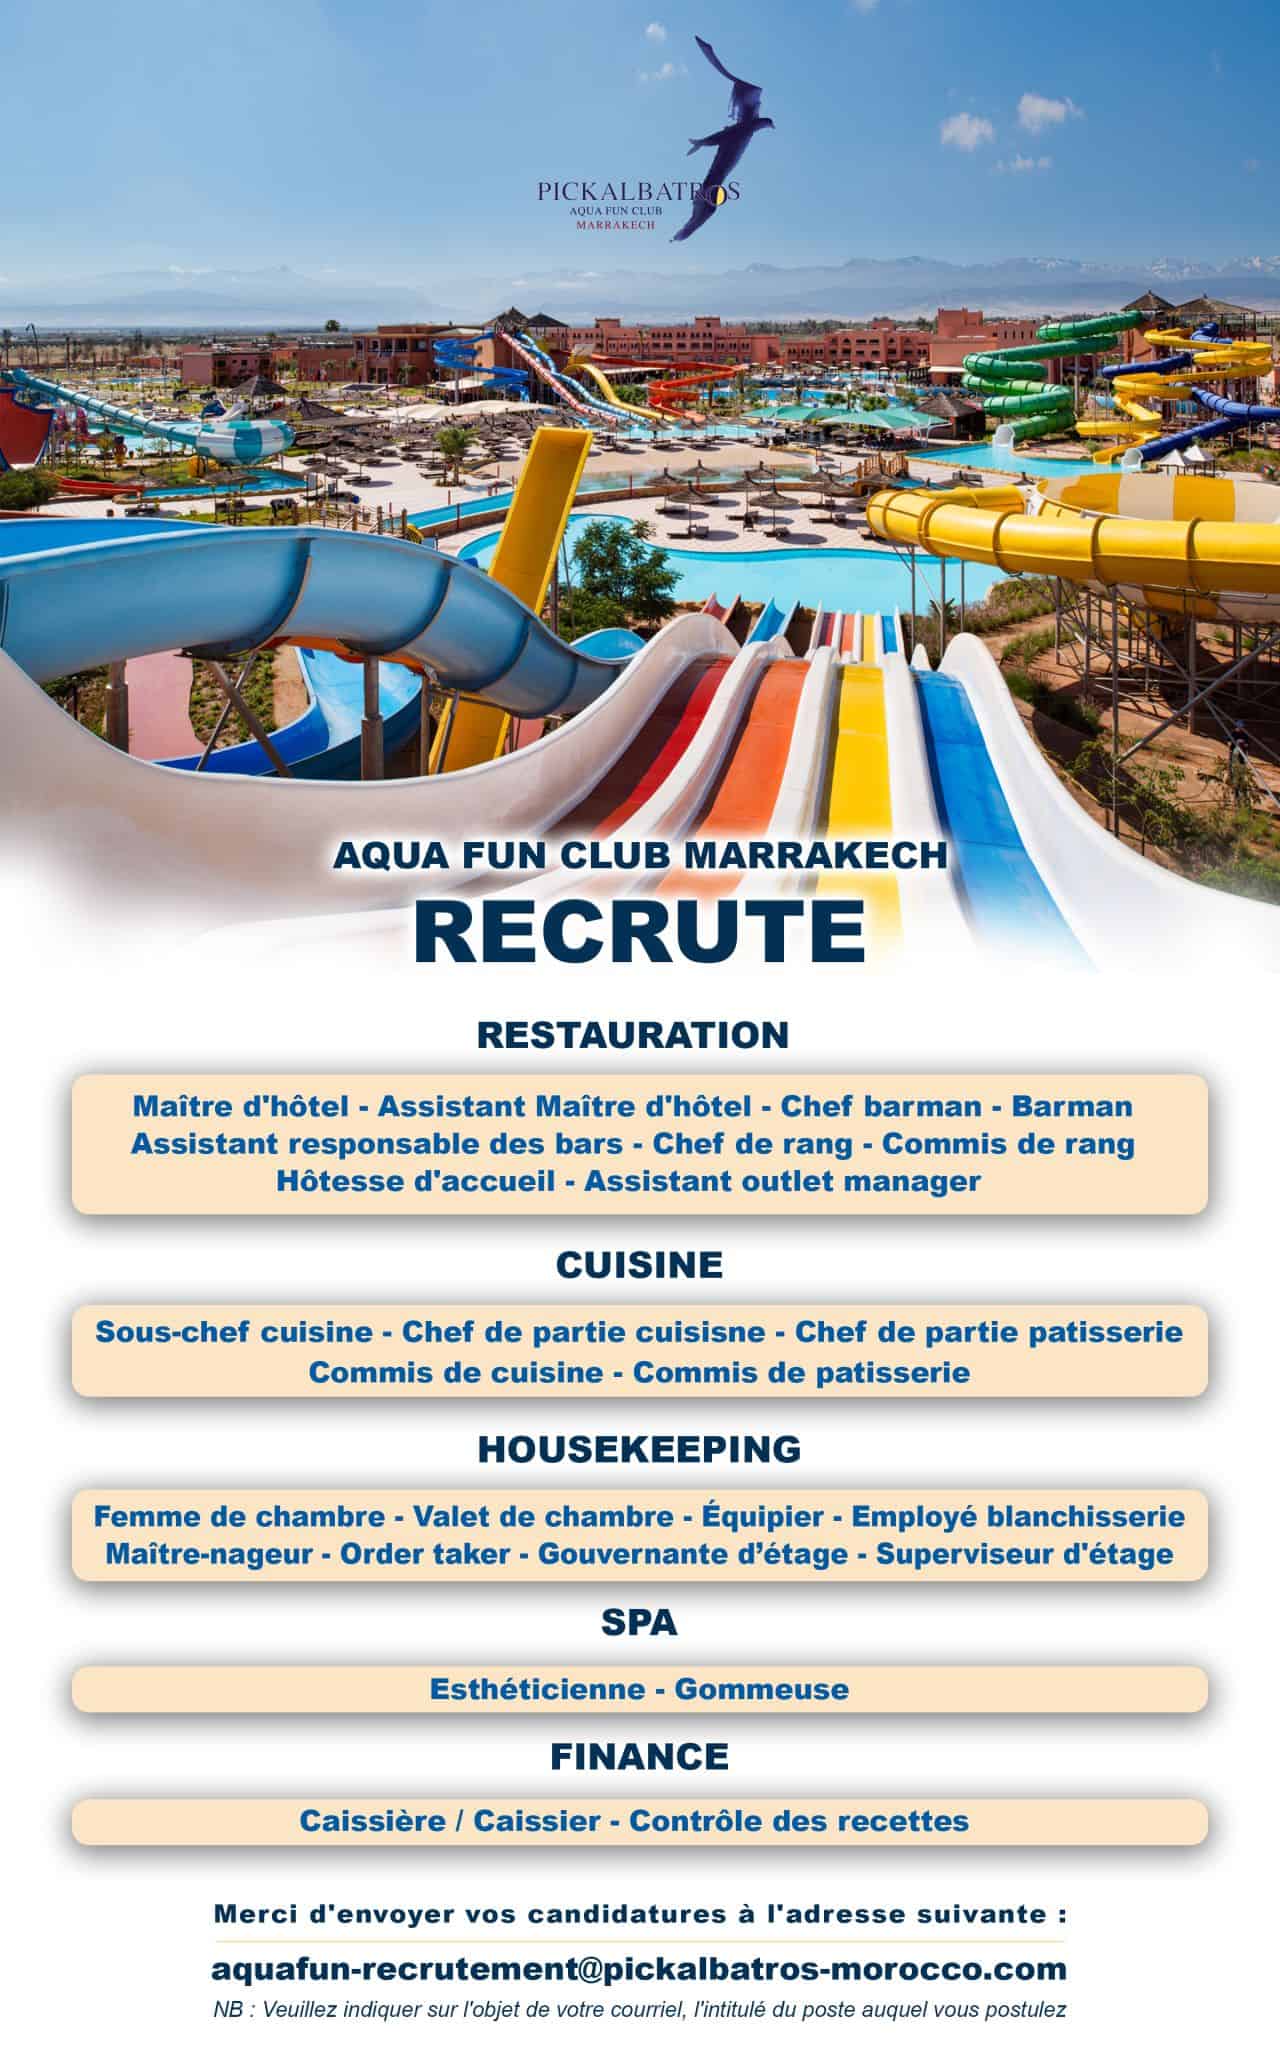 Aqua Fun Club Marrakech recrute Plusieurs Profils